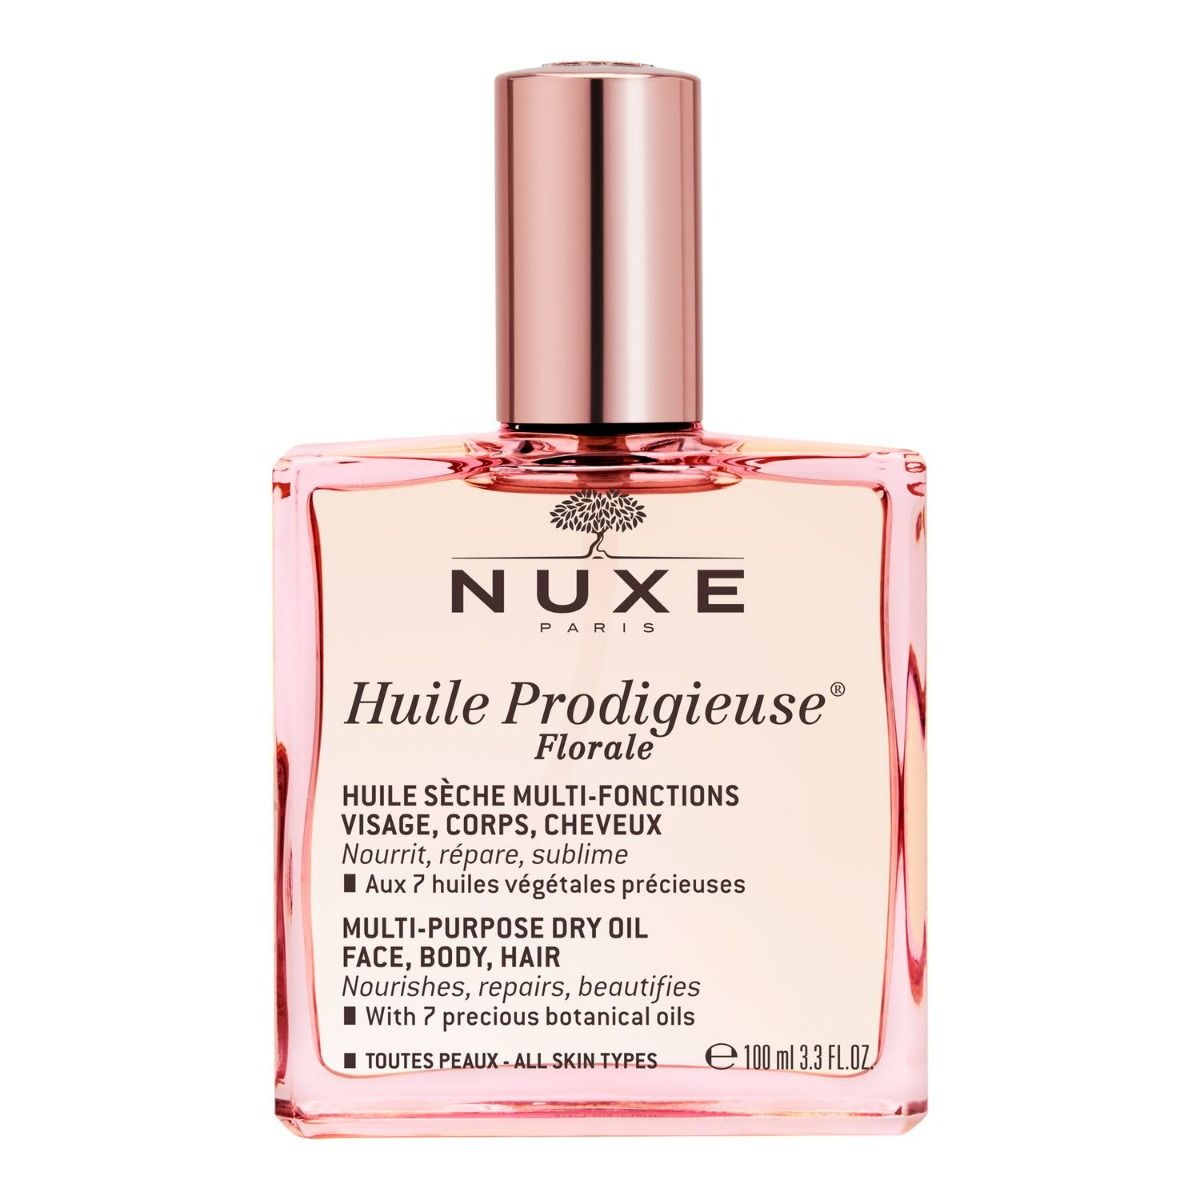 цена Nuxe Huile Prodigieuse Florale масло для лица, тела и волос, 100 ml